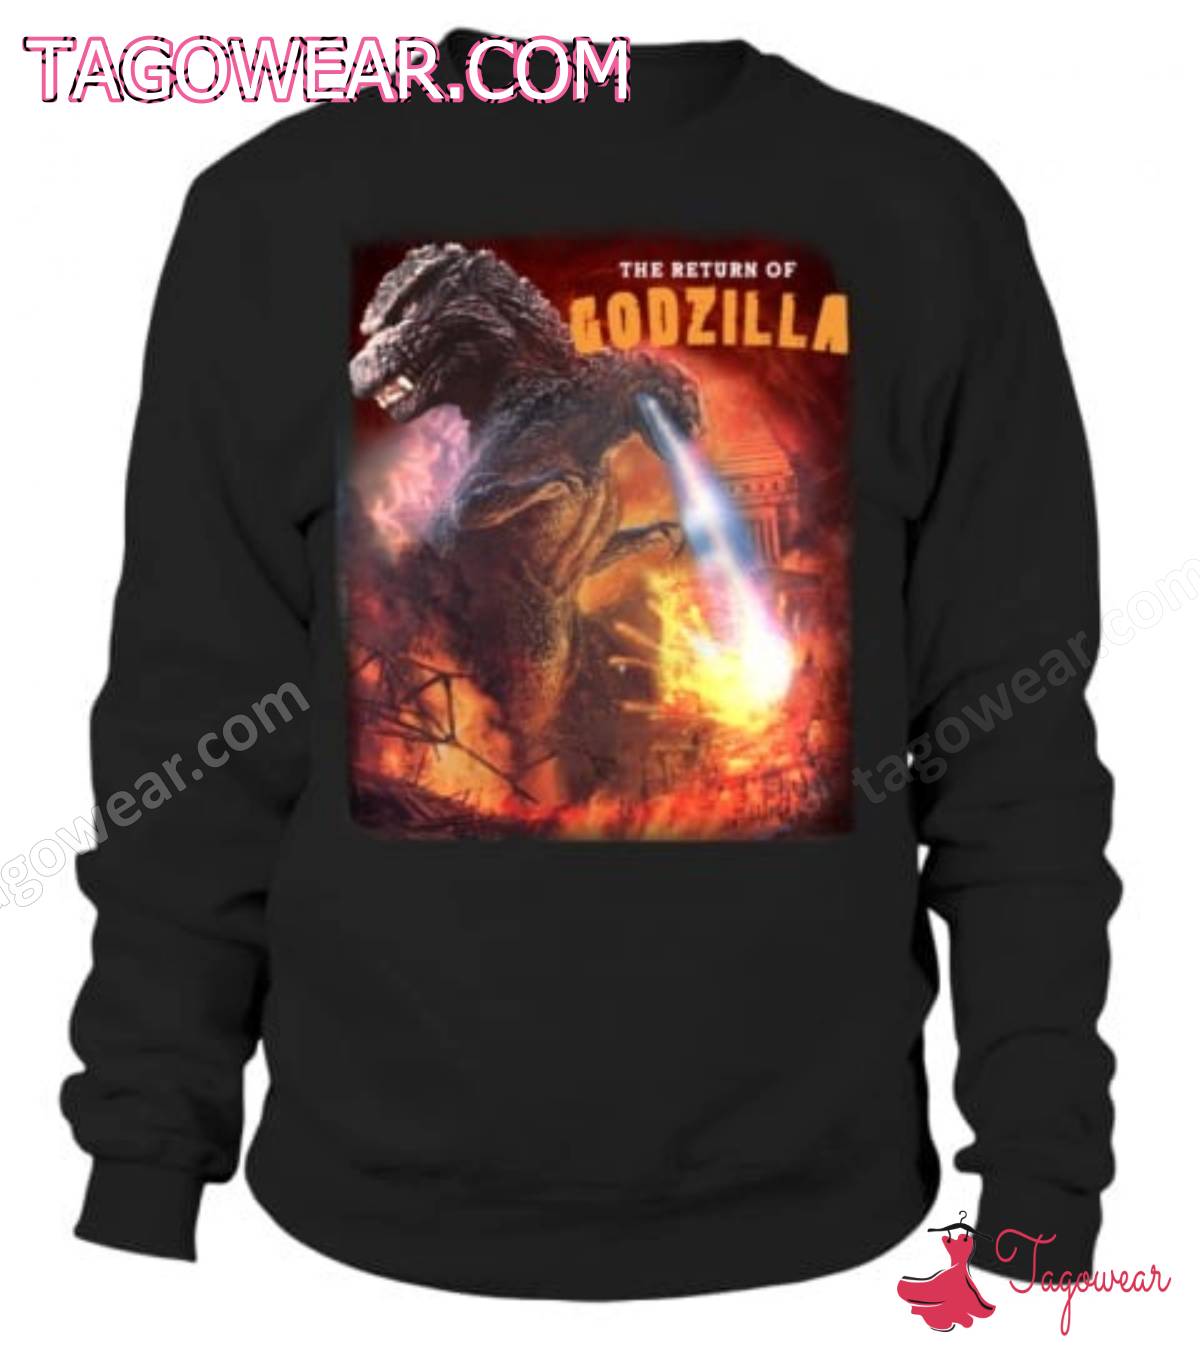 The Return Of Godzilla Shirt a